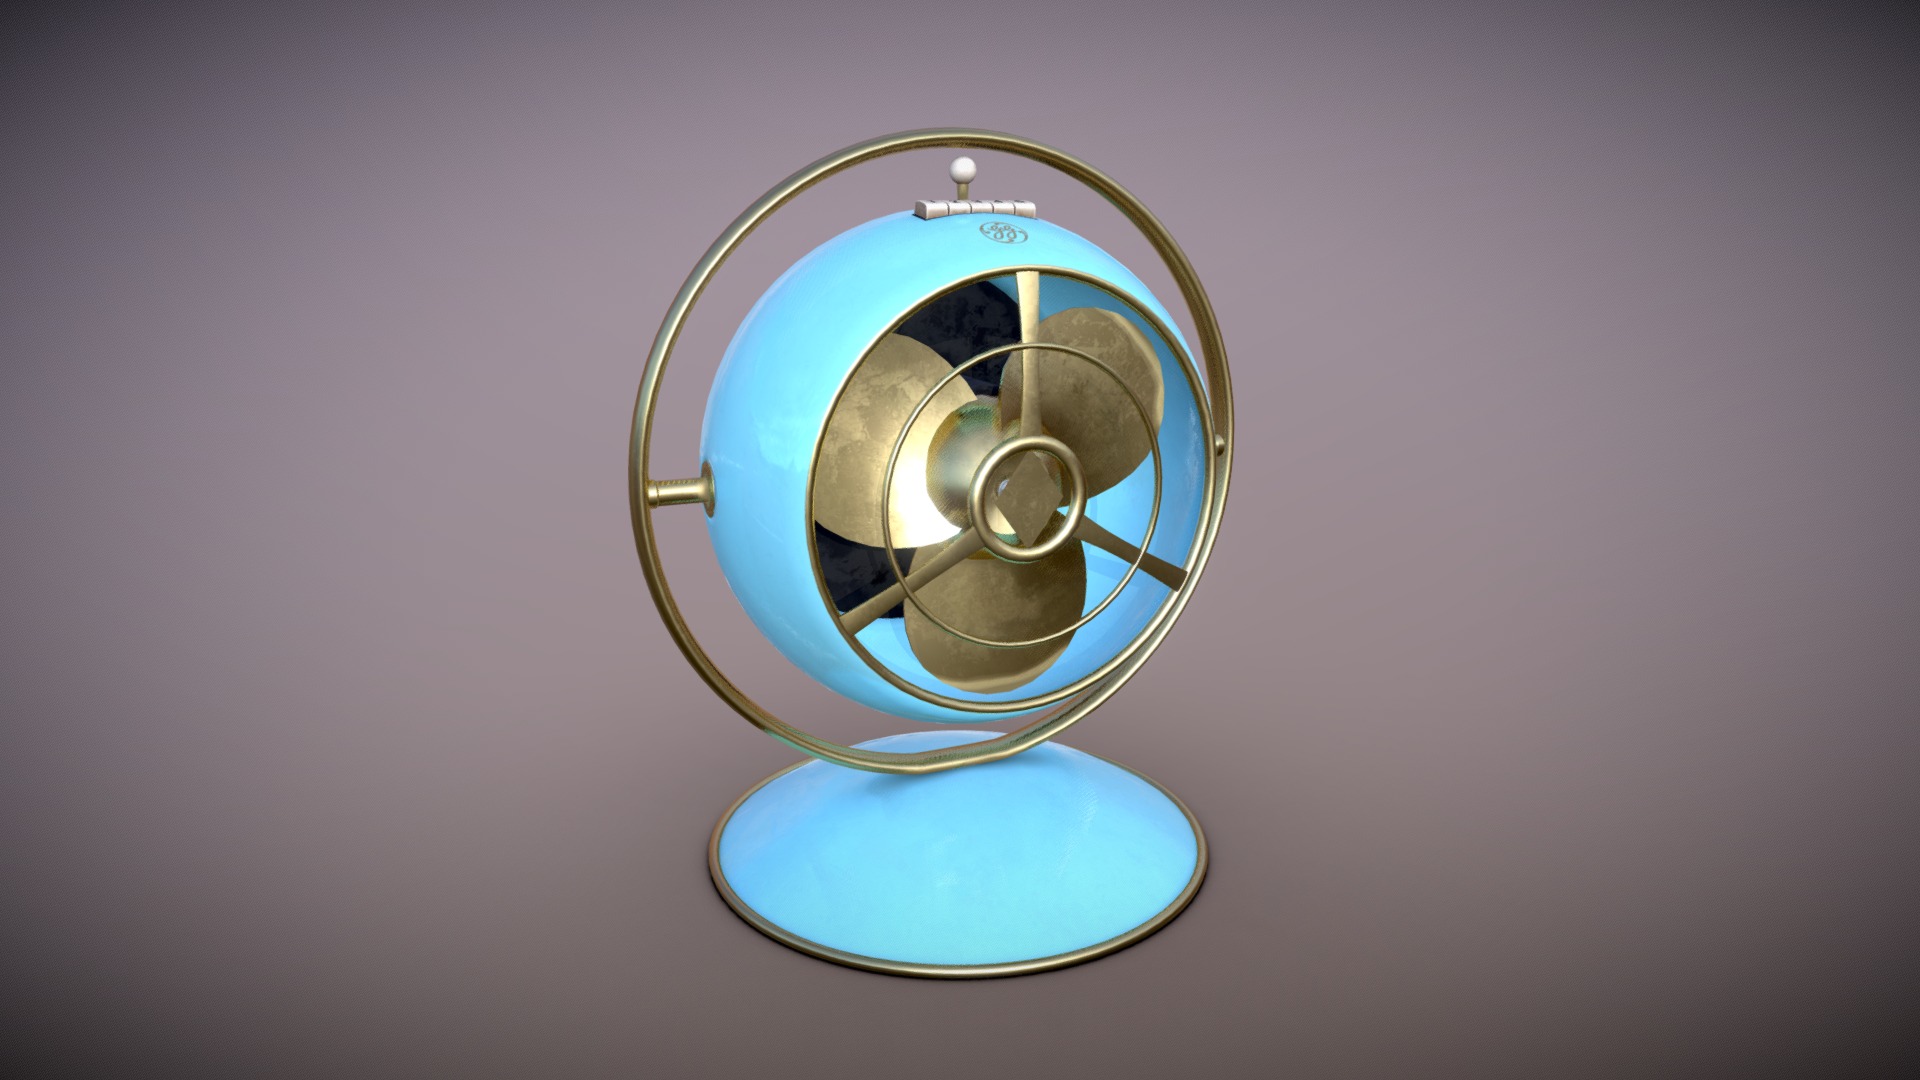 3D model Desktop fan 8 of 10 - This is a 3D model of the Desktop fan 8 of 10. The 3D model is about a blue and silver circular object.